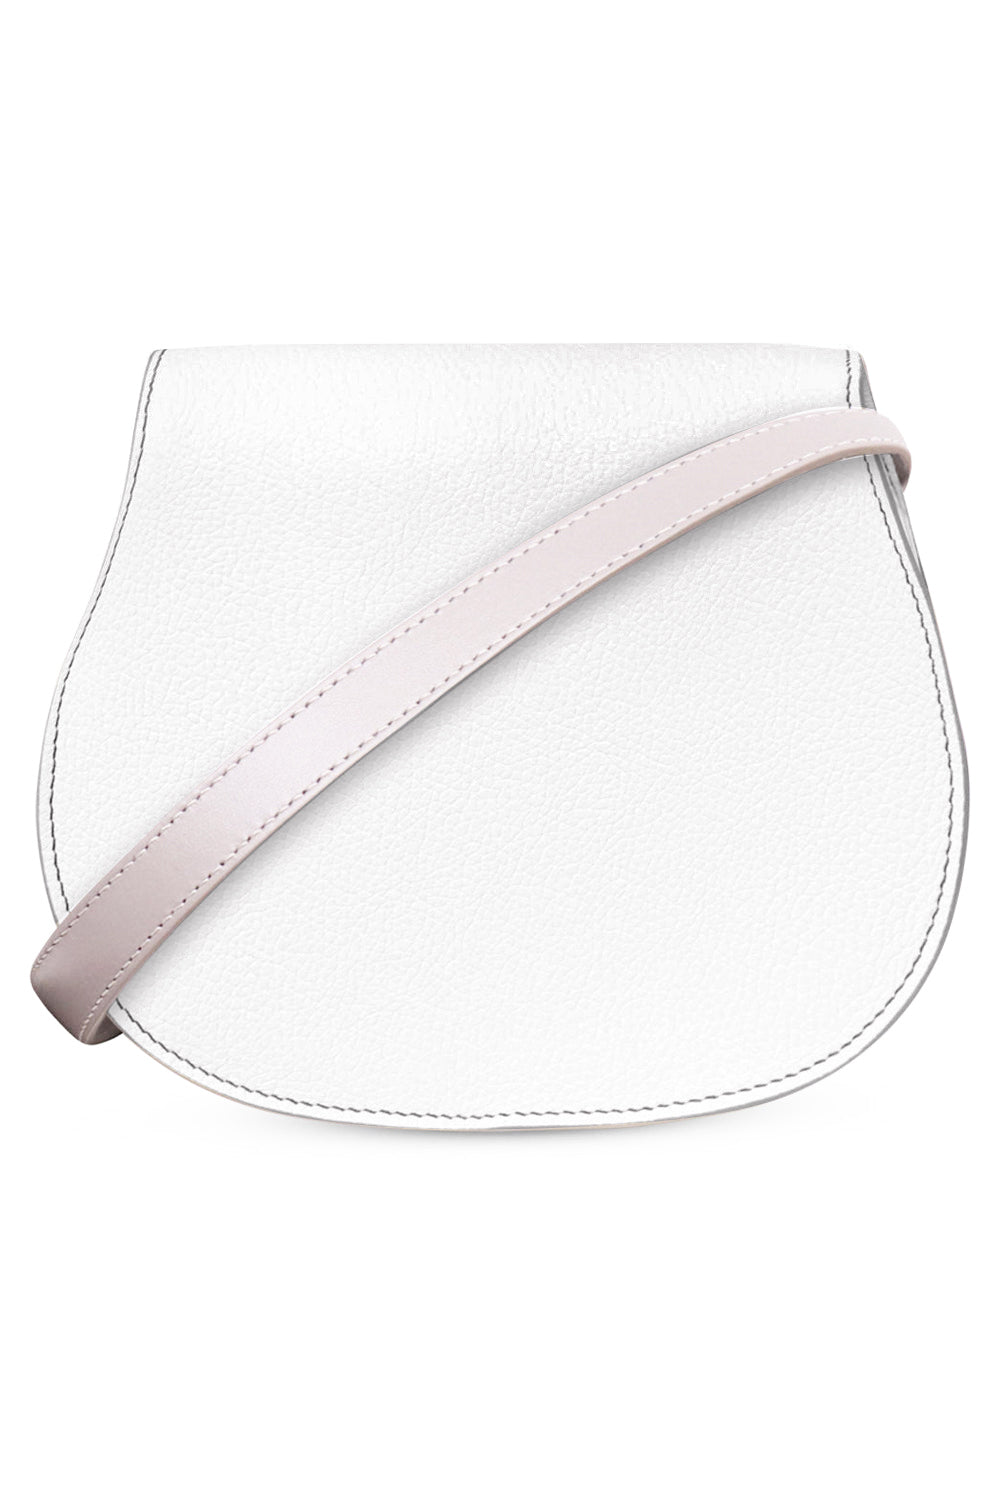 CHLOE BAGS WHITE MARCIE SMALL BAG | CRYSTAL WHITE